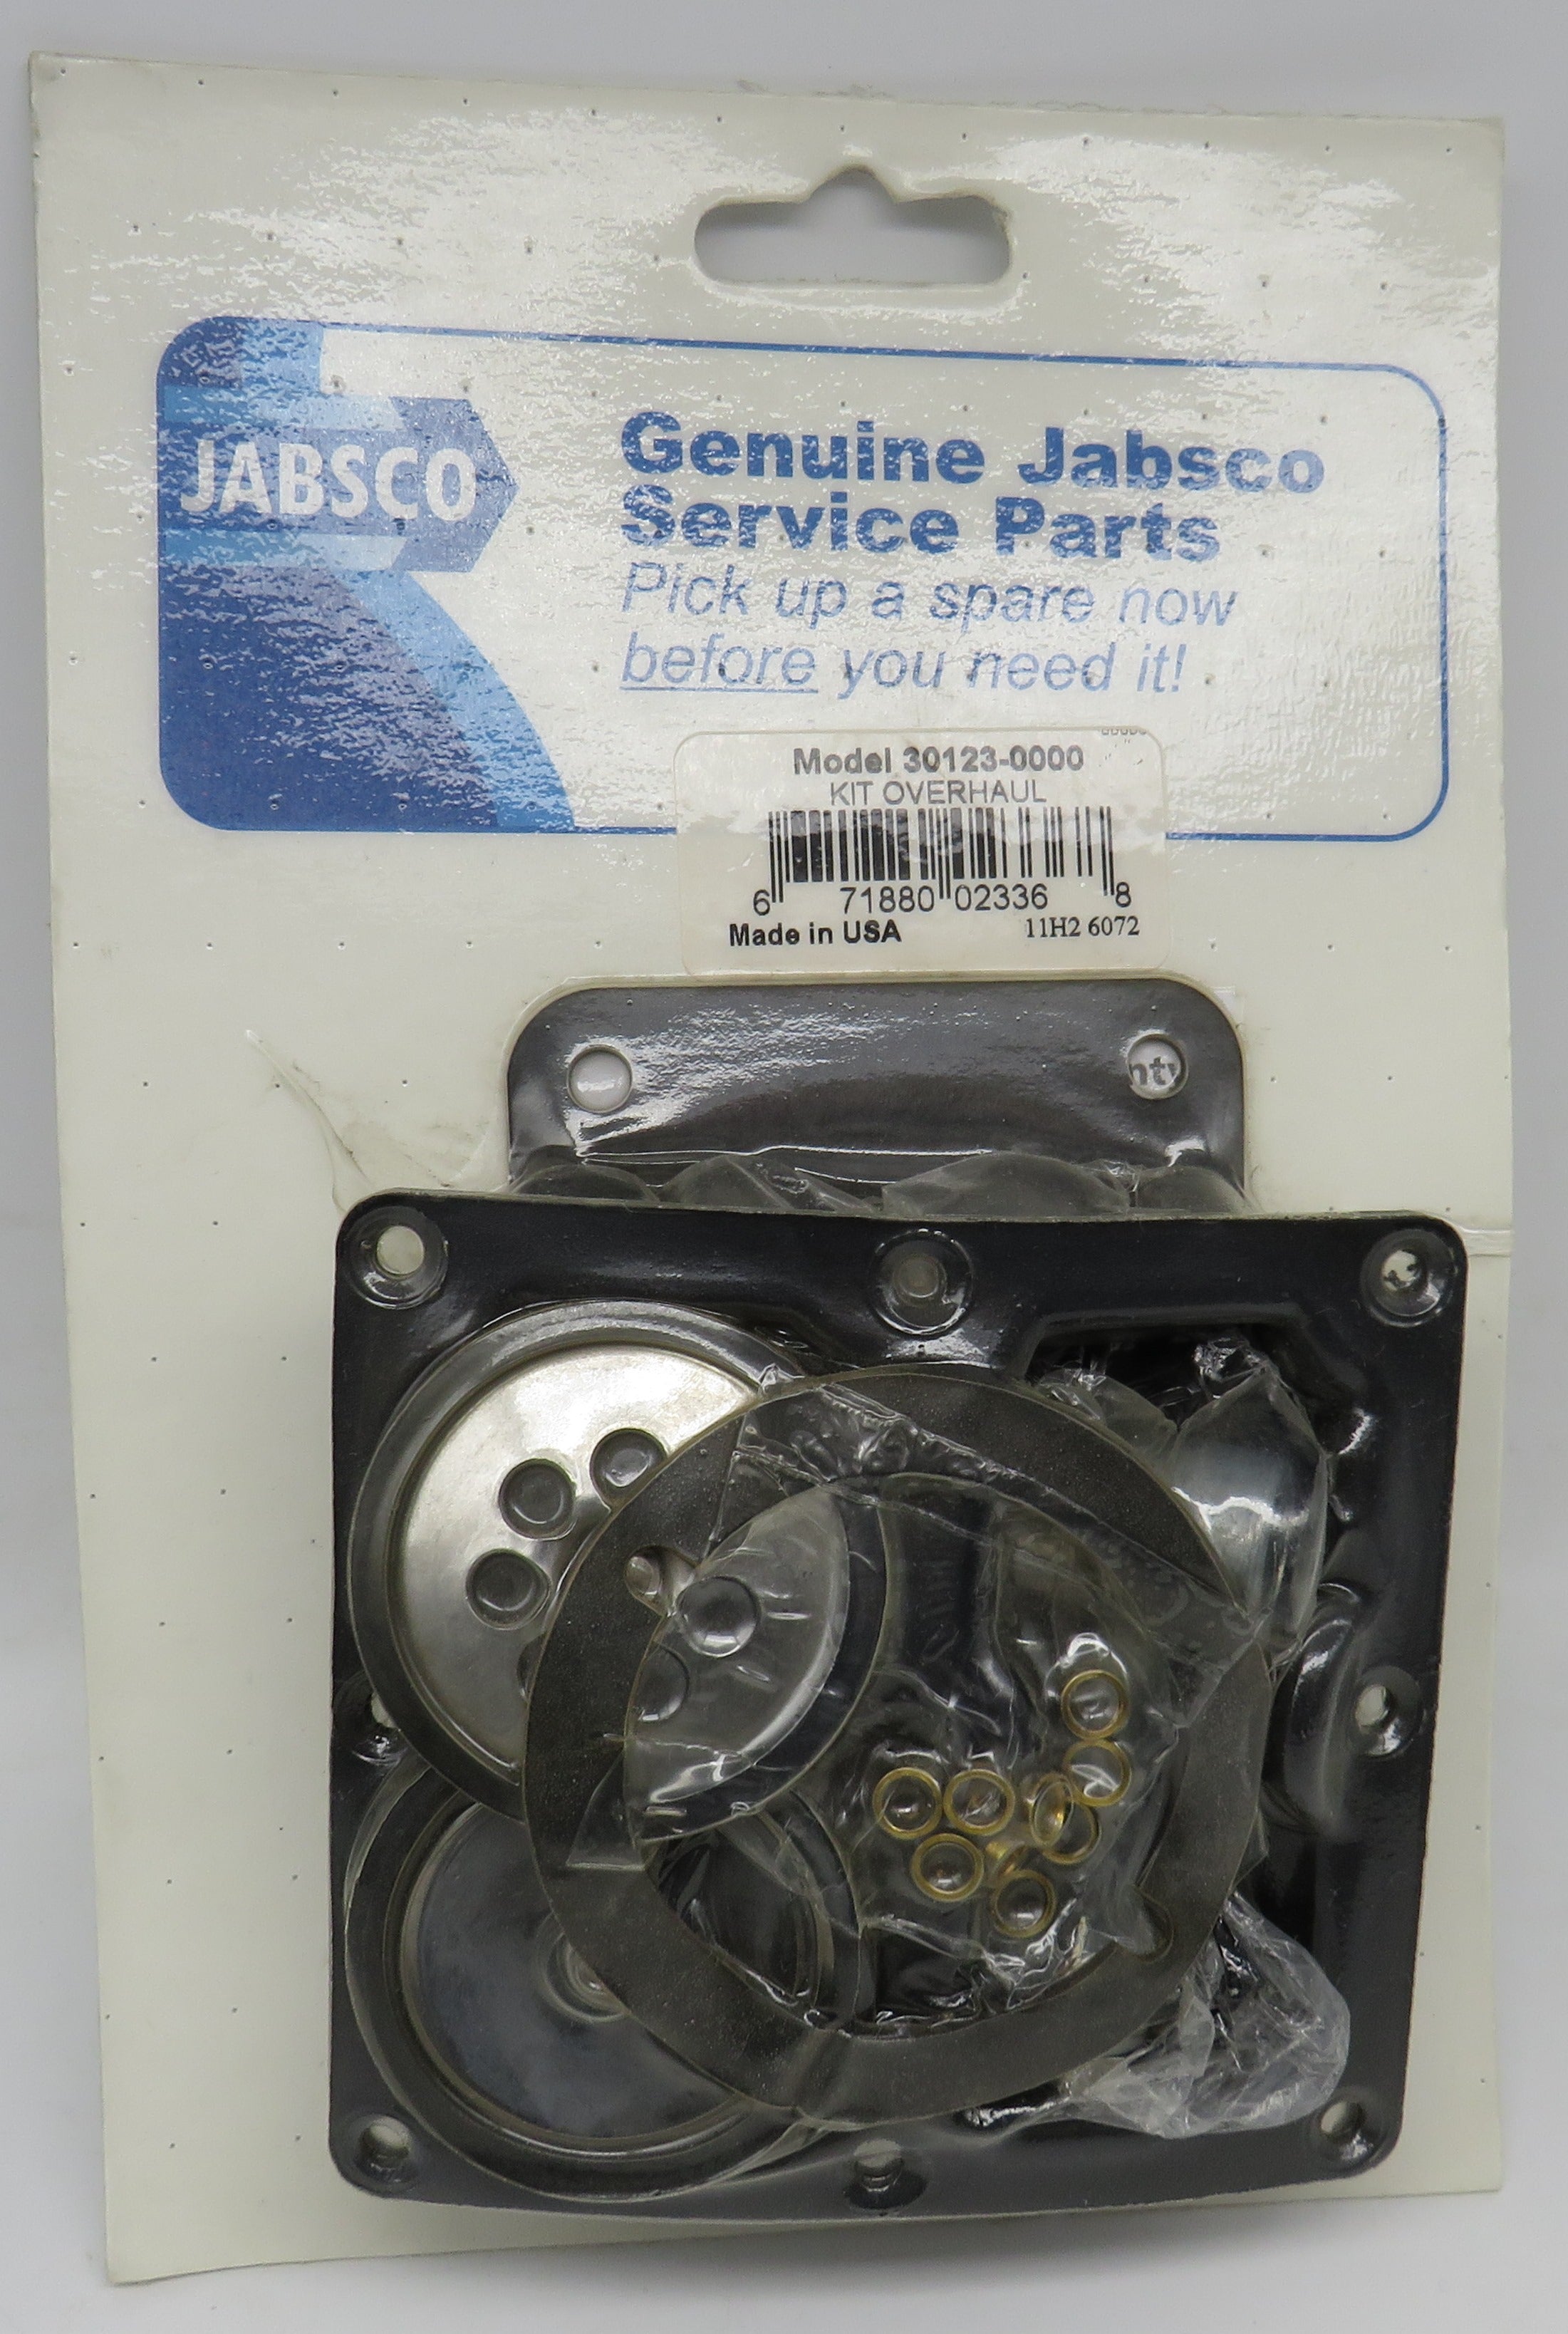 30123-0000 Jabsco Par Overhaul Service Repair Kit For 36970-0000 Series Pumps 8482